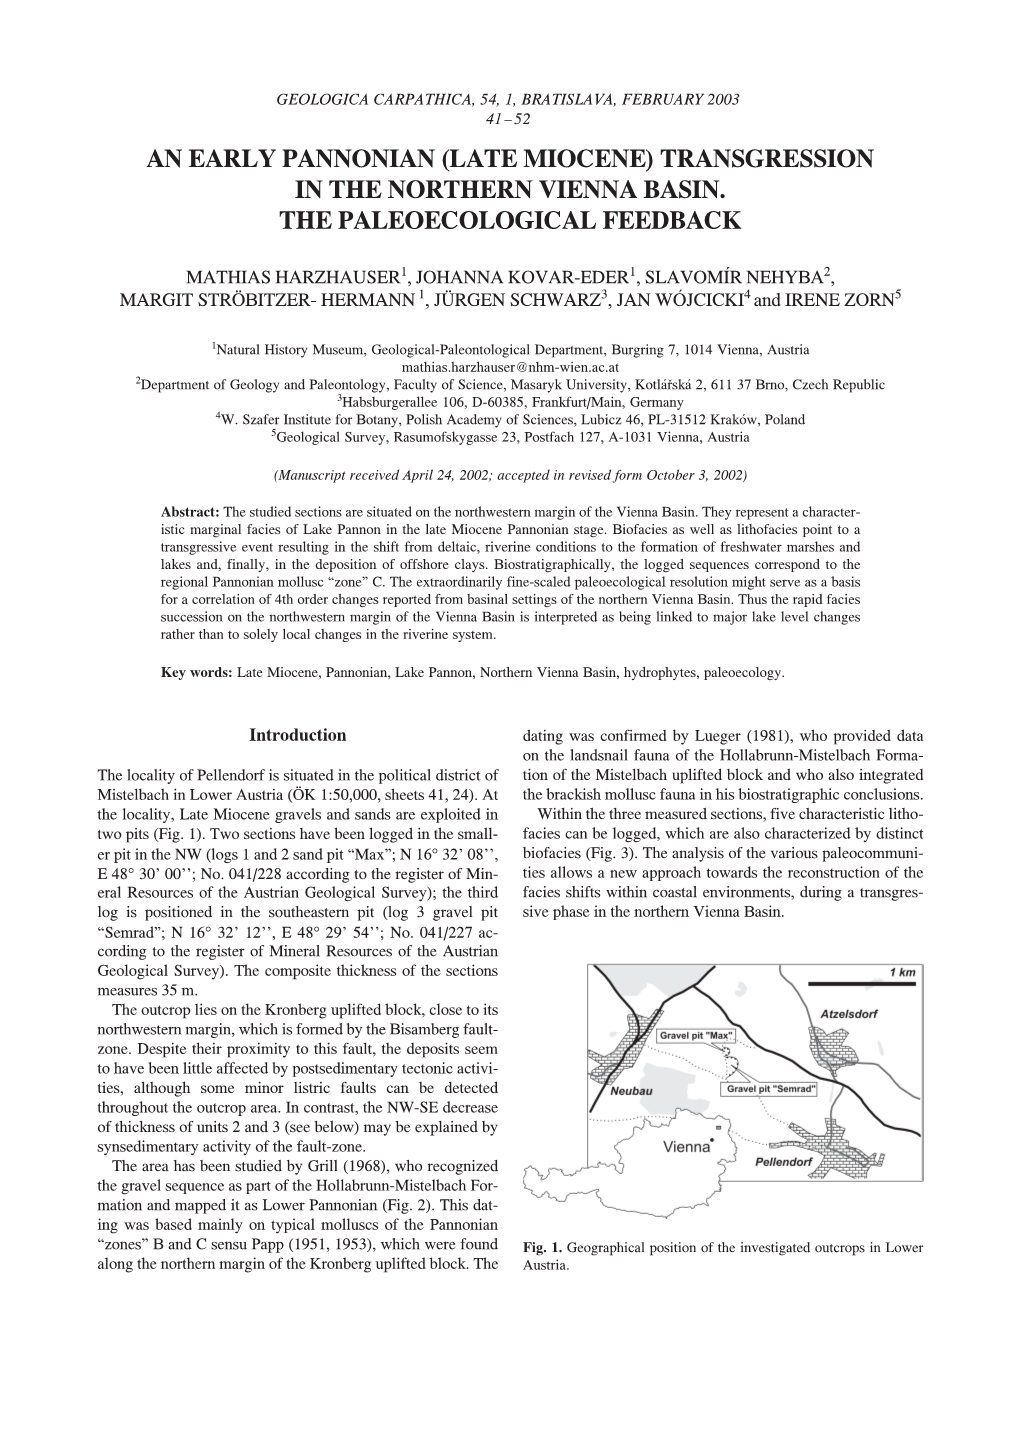 Late Miocene) Transgression in the Northern Vienna Basin